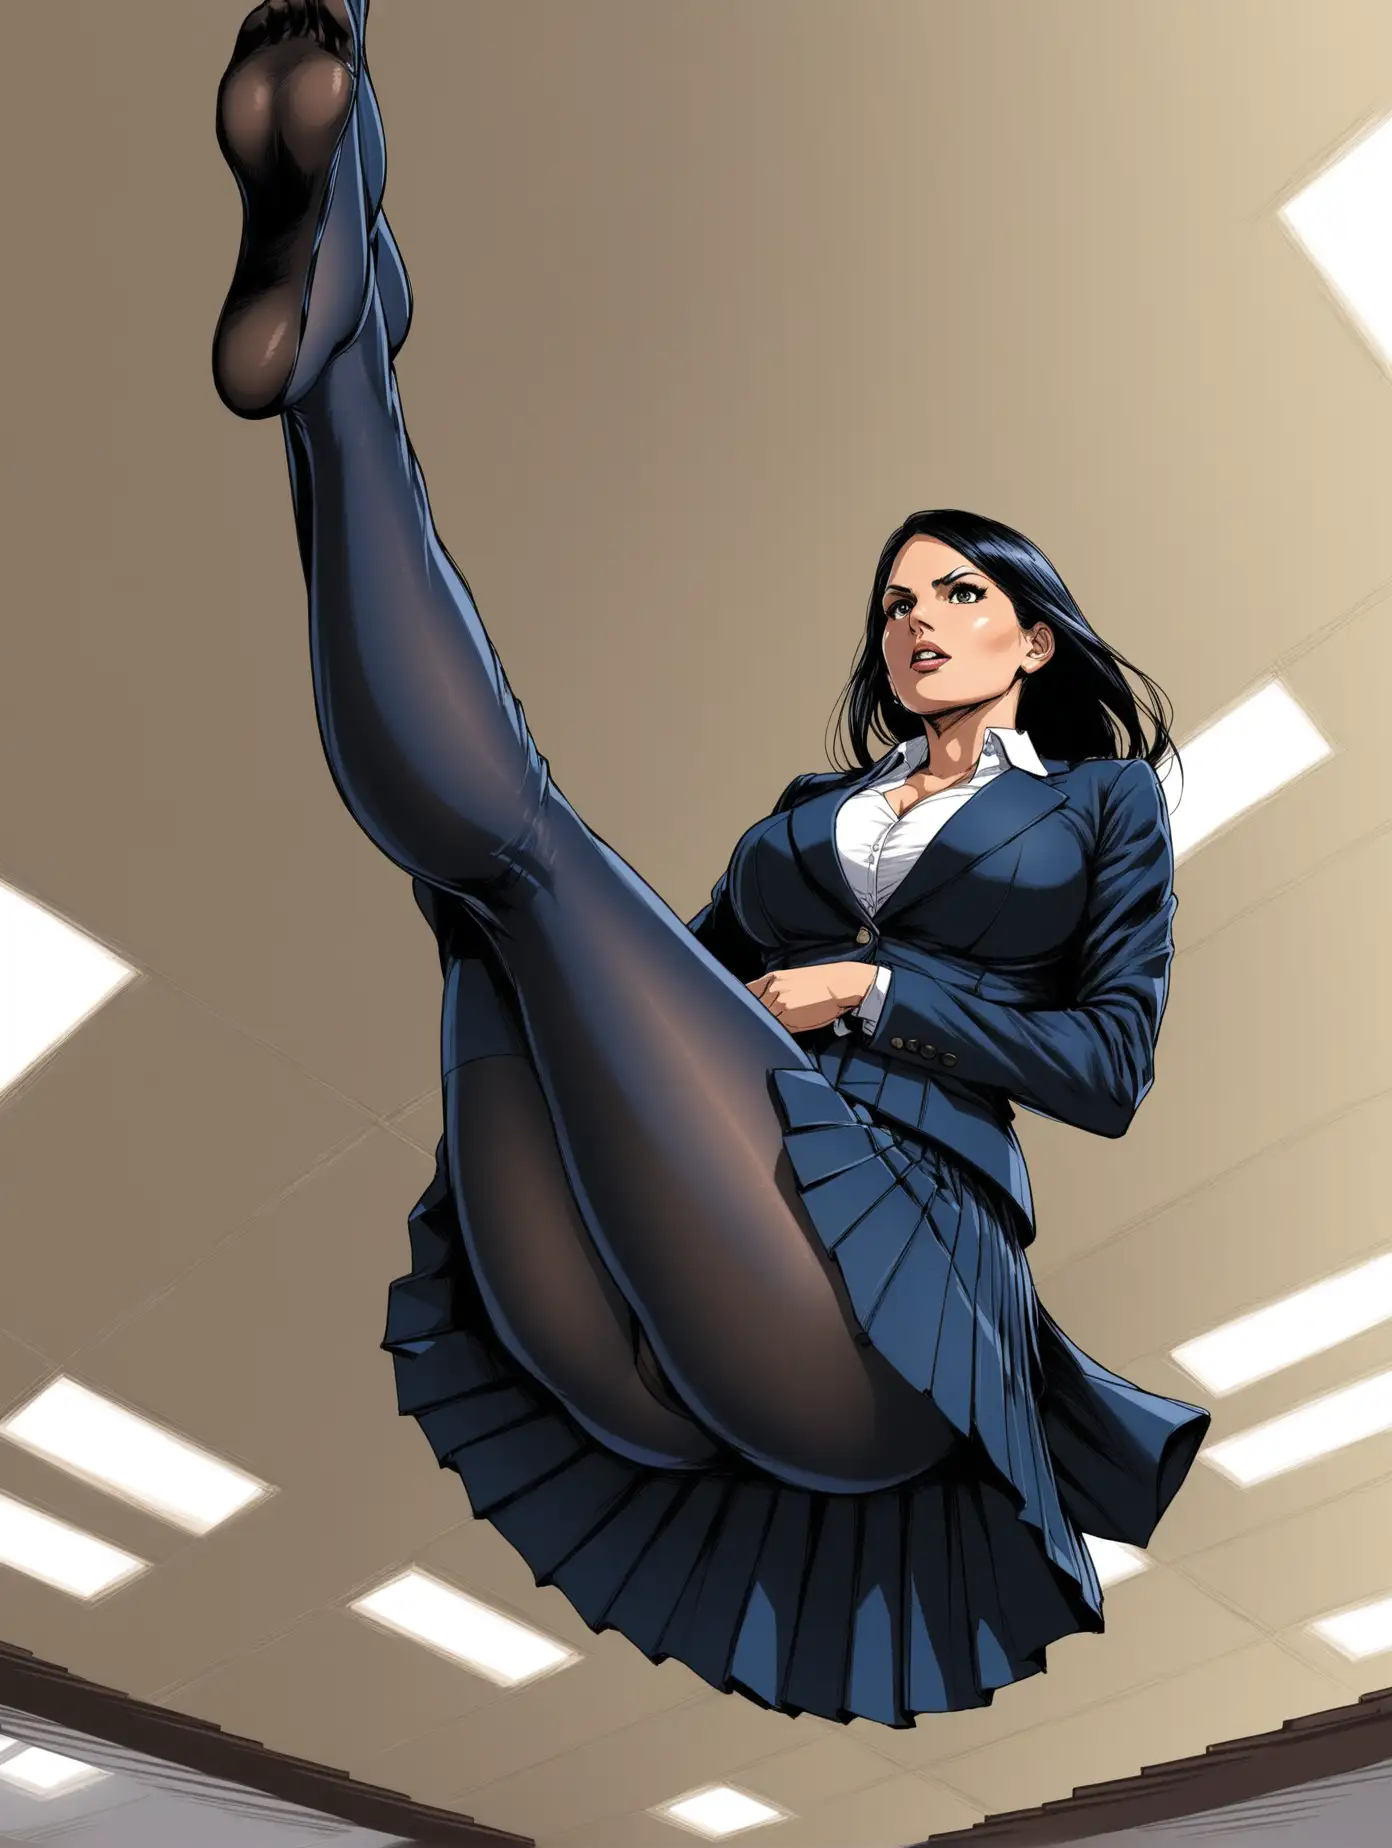 Mature, Priti Patel, dark navy suit [Highly Detailed] Bernie Wrightson art style, navy pantyhose, below view, long pleated skirt, confused, floating in office, feet dangling,  cleavage